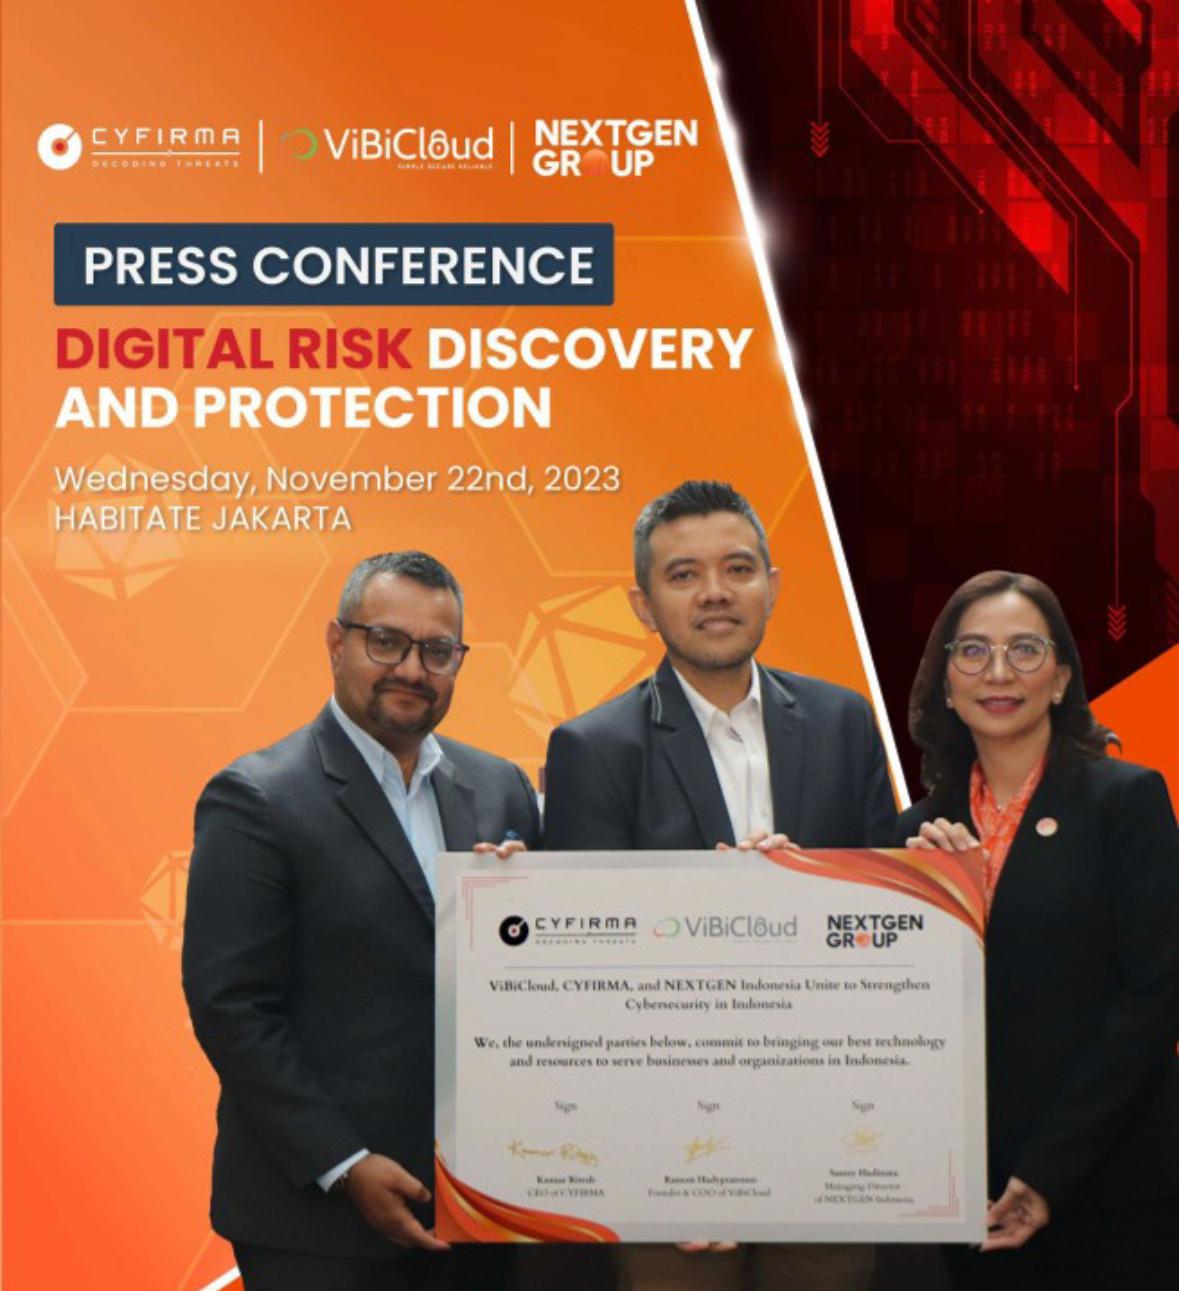 ViBiCloud, CYFIRMA and NEXTGEN Indonesia Unite to Strengthen Cybersecurity in Indonesia